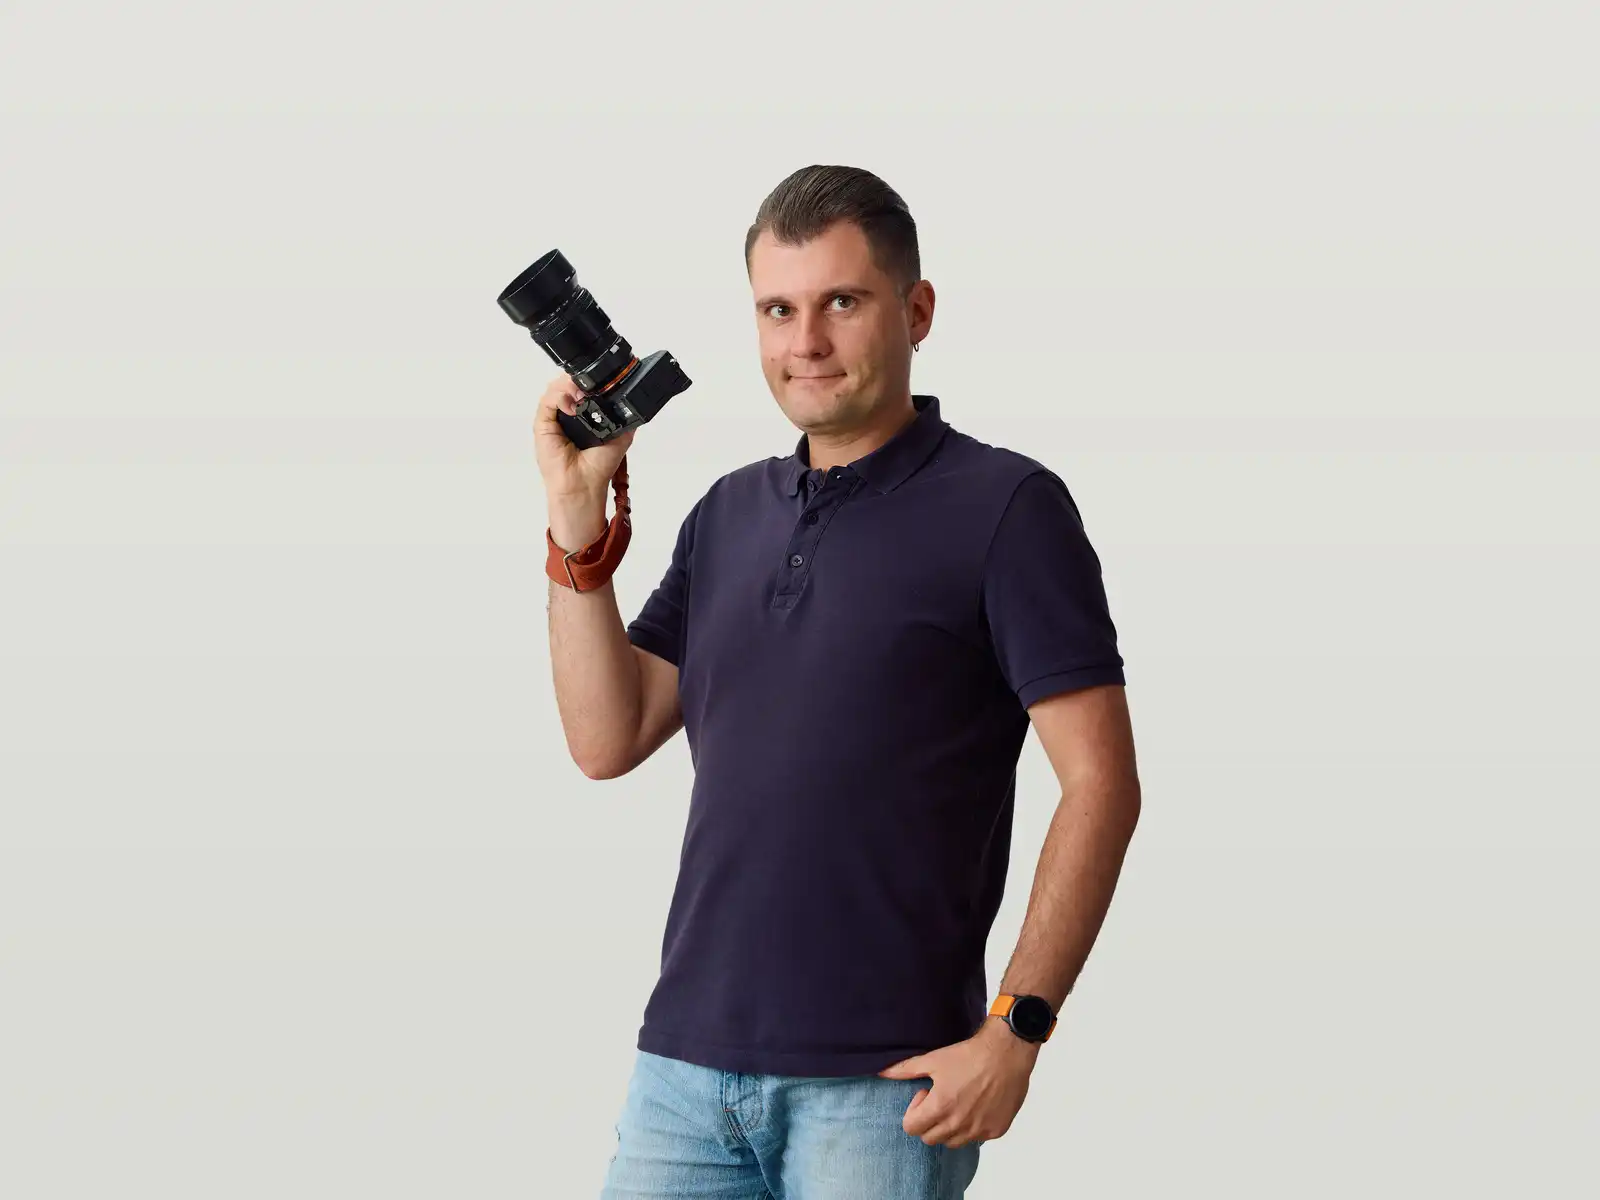 Andrei holding a DSLR camera